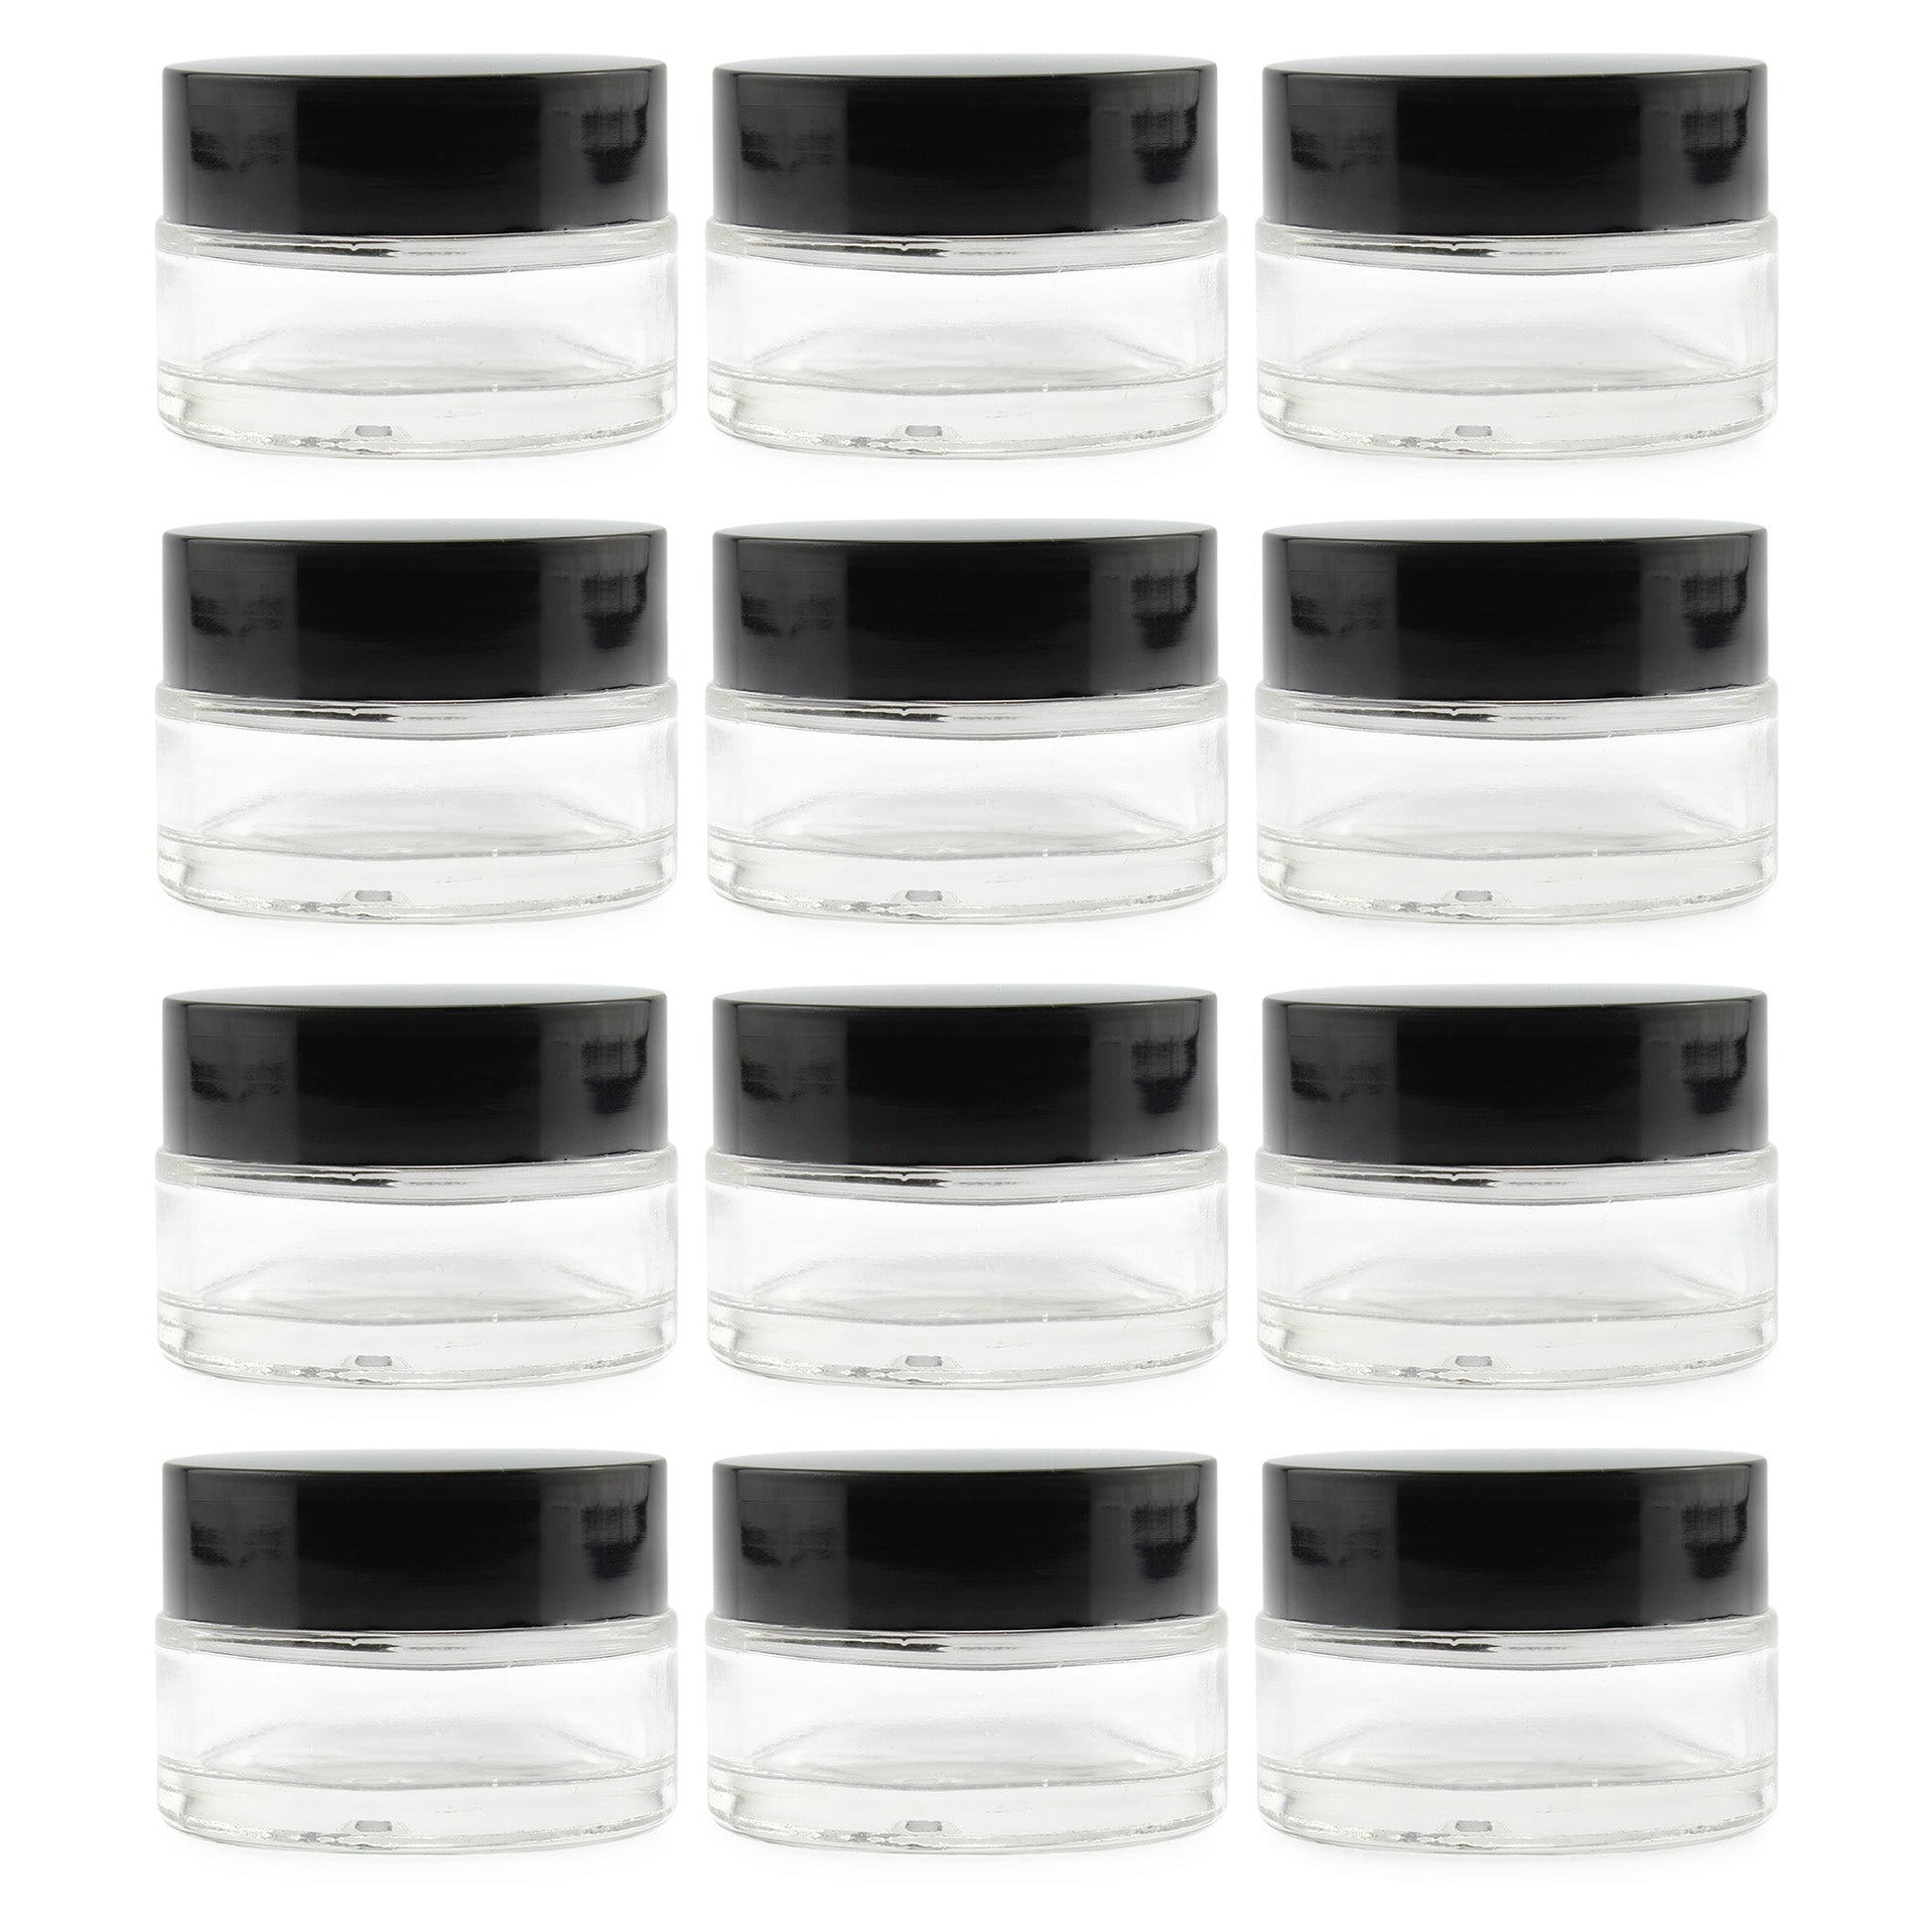 15-Milliliter Clear Glass Balm Jars (12-Pack) - sh1499cb015ml